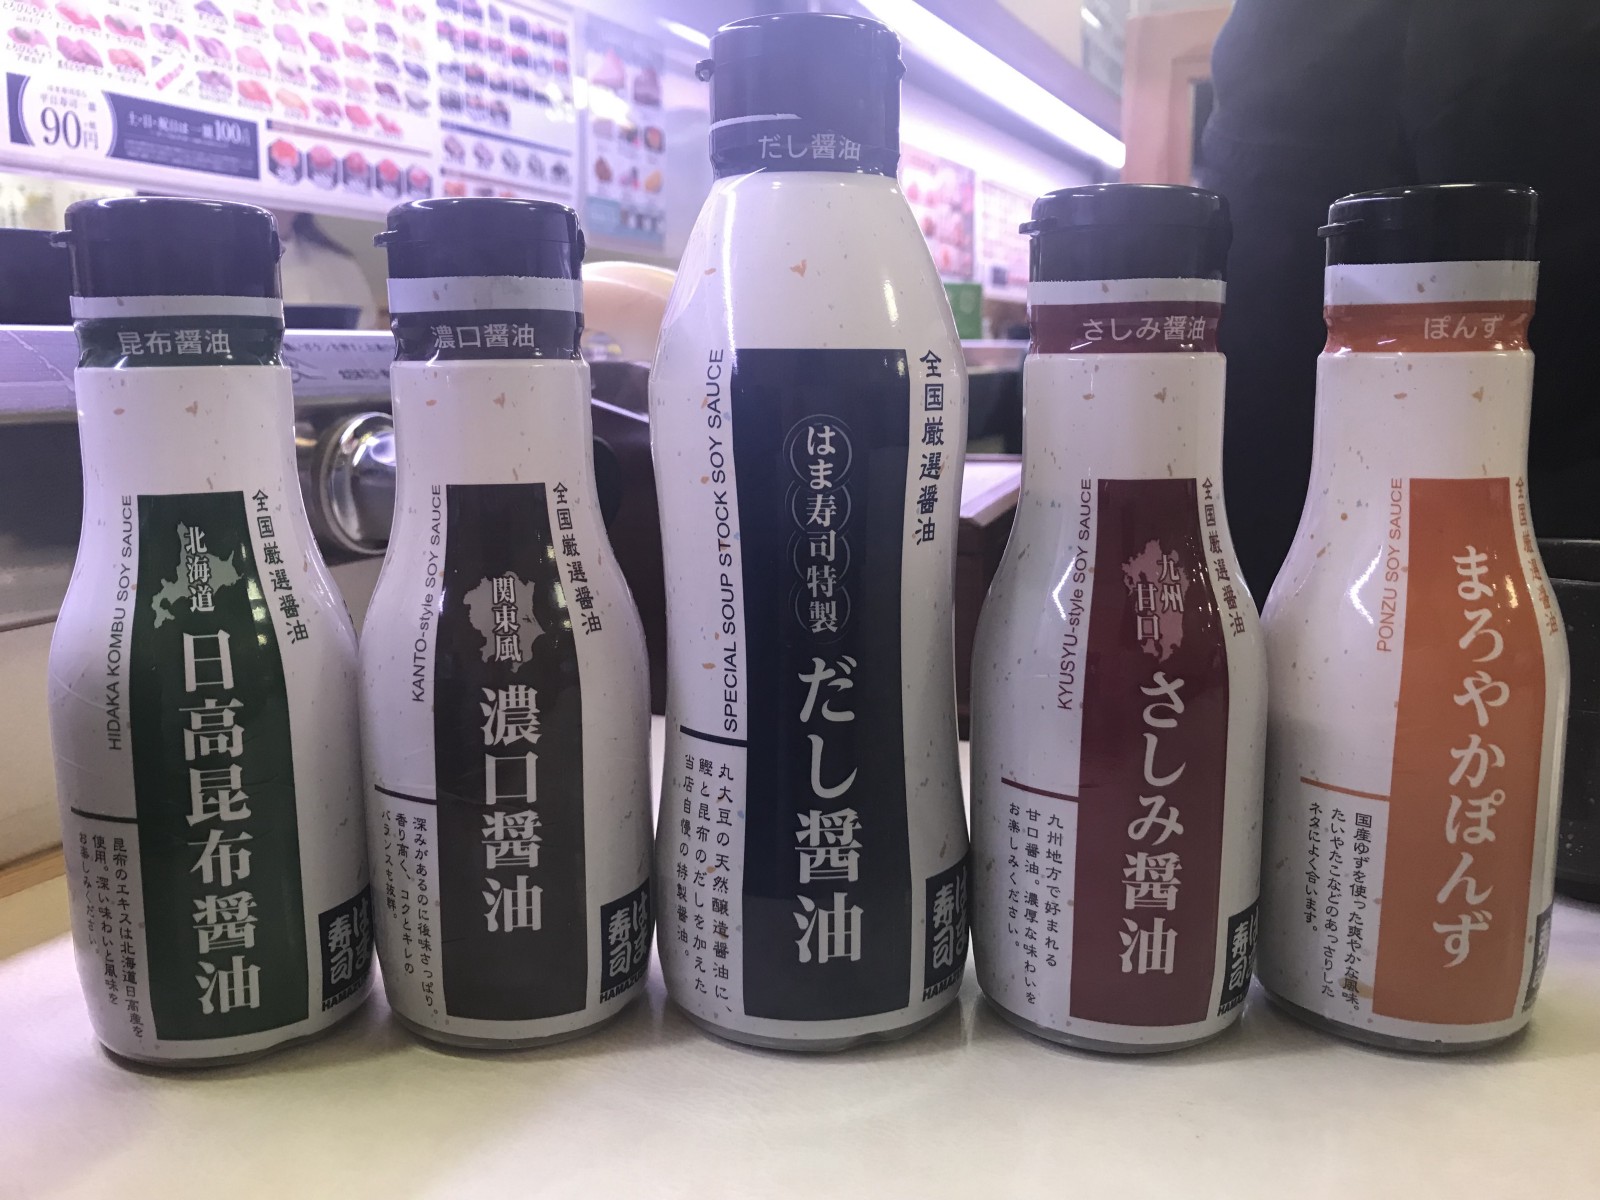 A variety of Soya sauce available at Hama Sushi